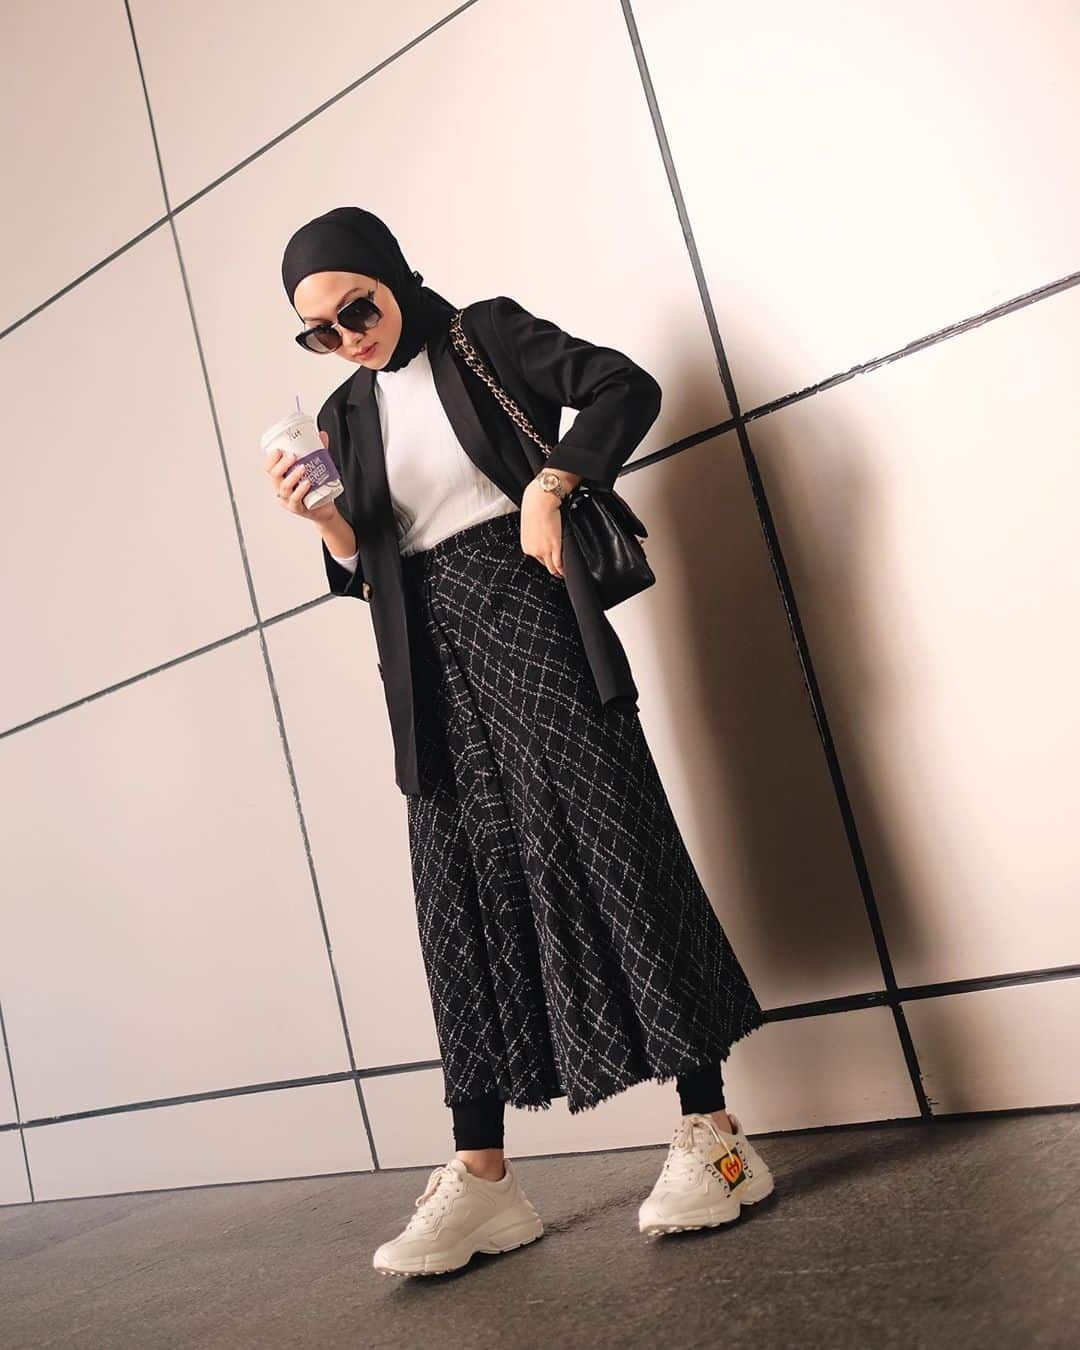 Tetap Stylist, 10 Gaya Fashion Hijab yang Cocok untuk Aktivitas Outdoor - Tetap Stylist, 10 Gaya Fashion Hijab yang Cocok untuk Aktivitas Outdoor -   18 style Hijab jaket ideas